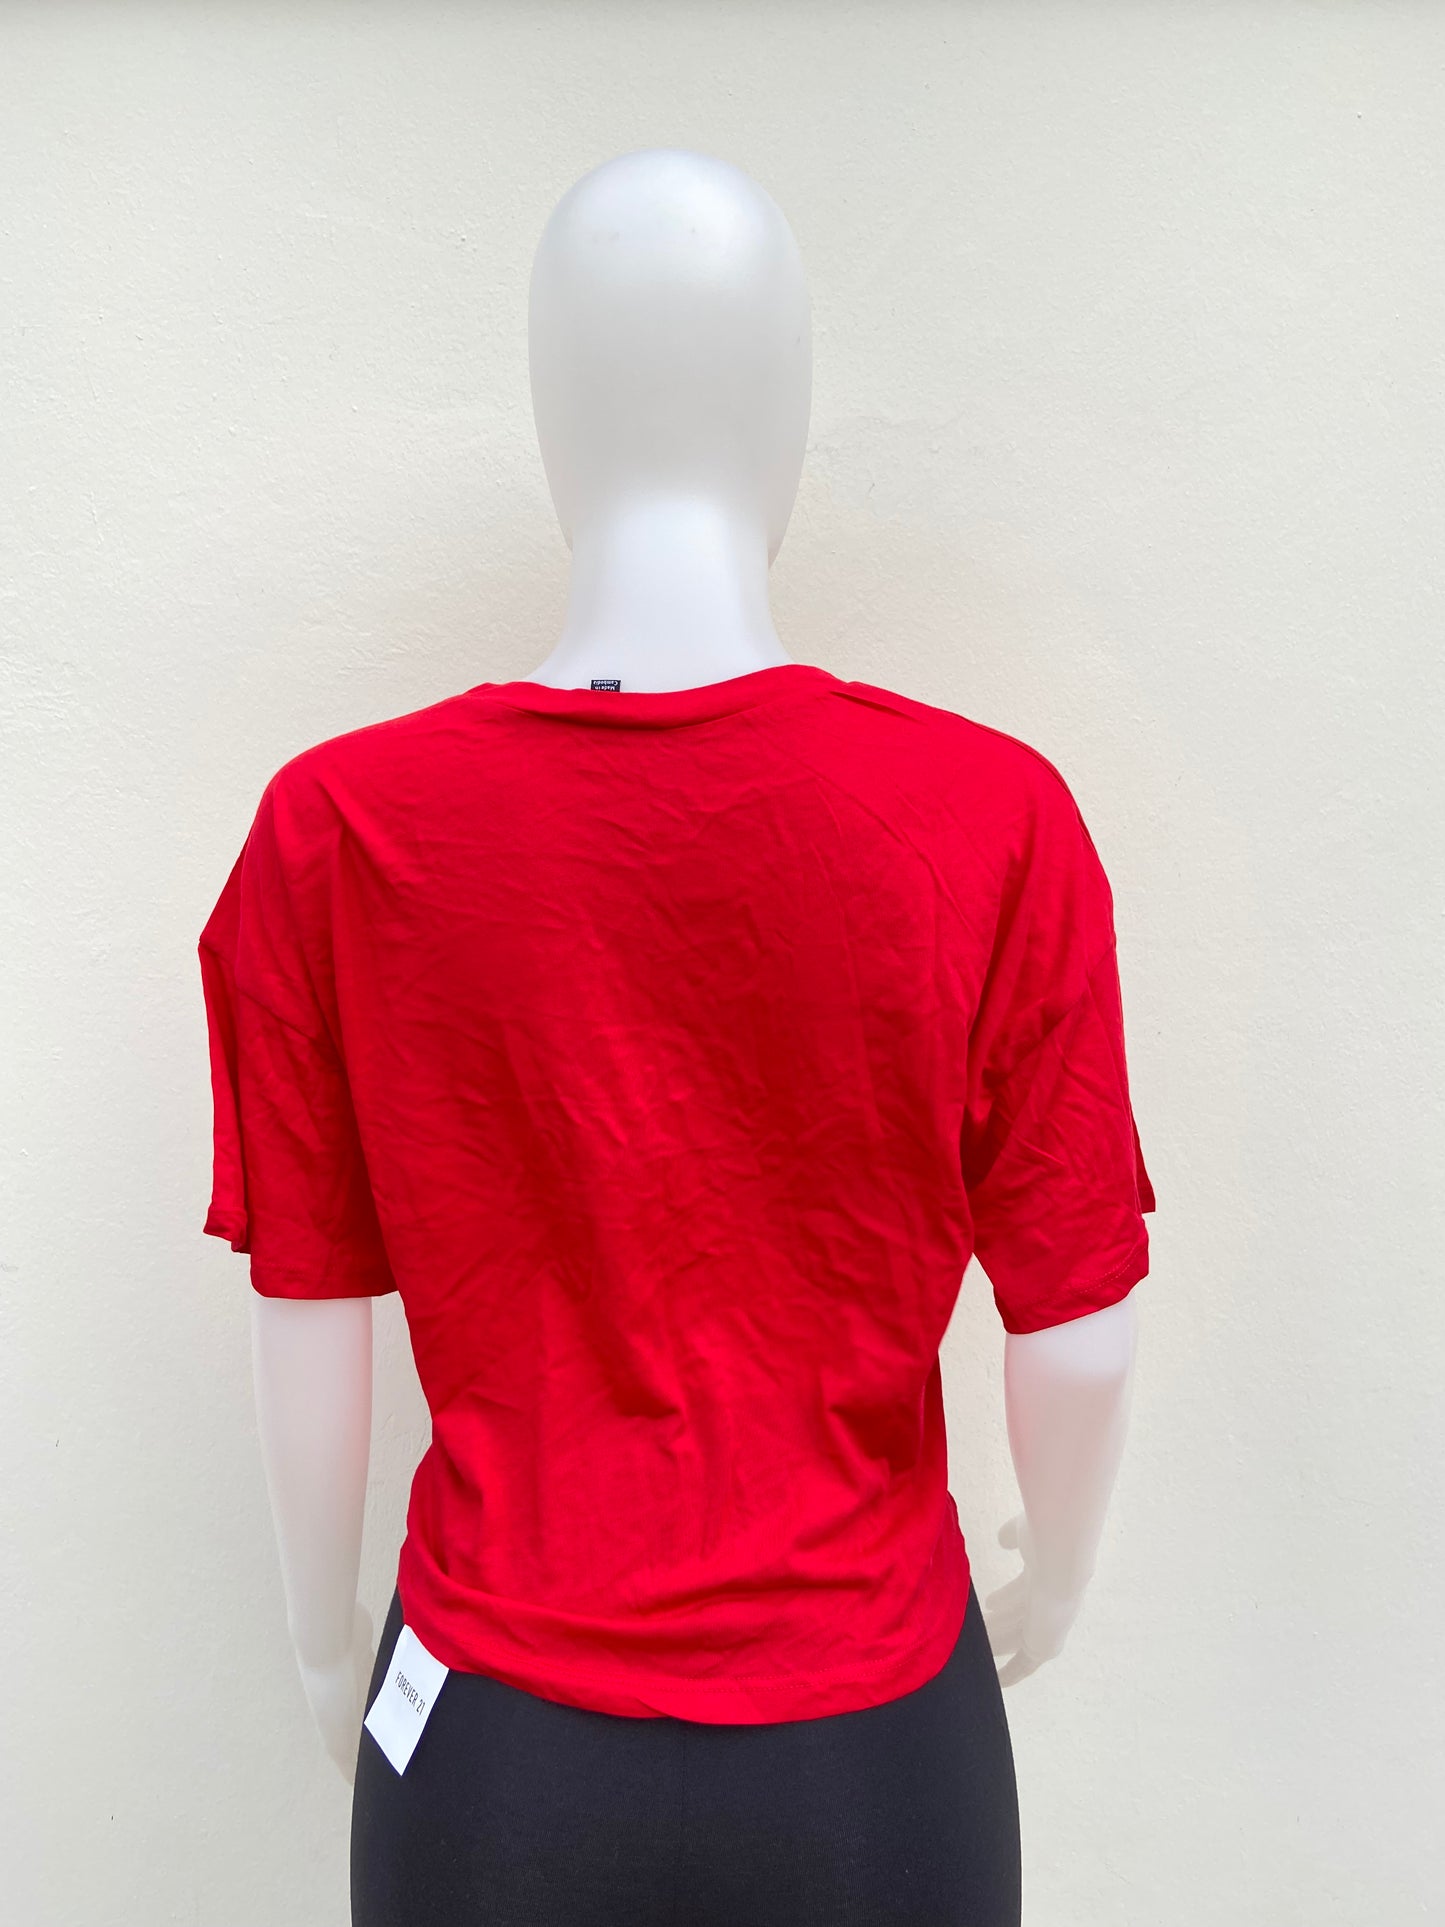 Top/ t-shirt Ambiance original rojo liso.